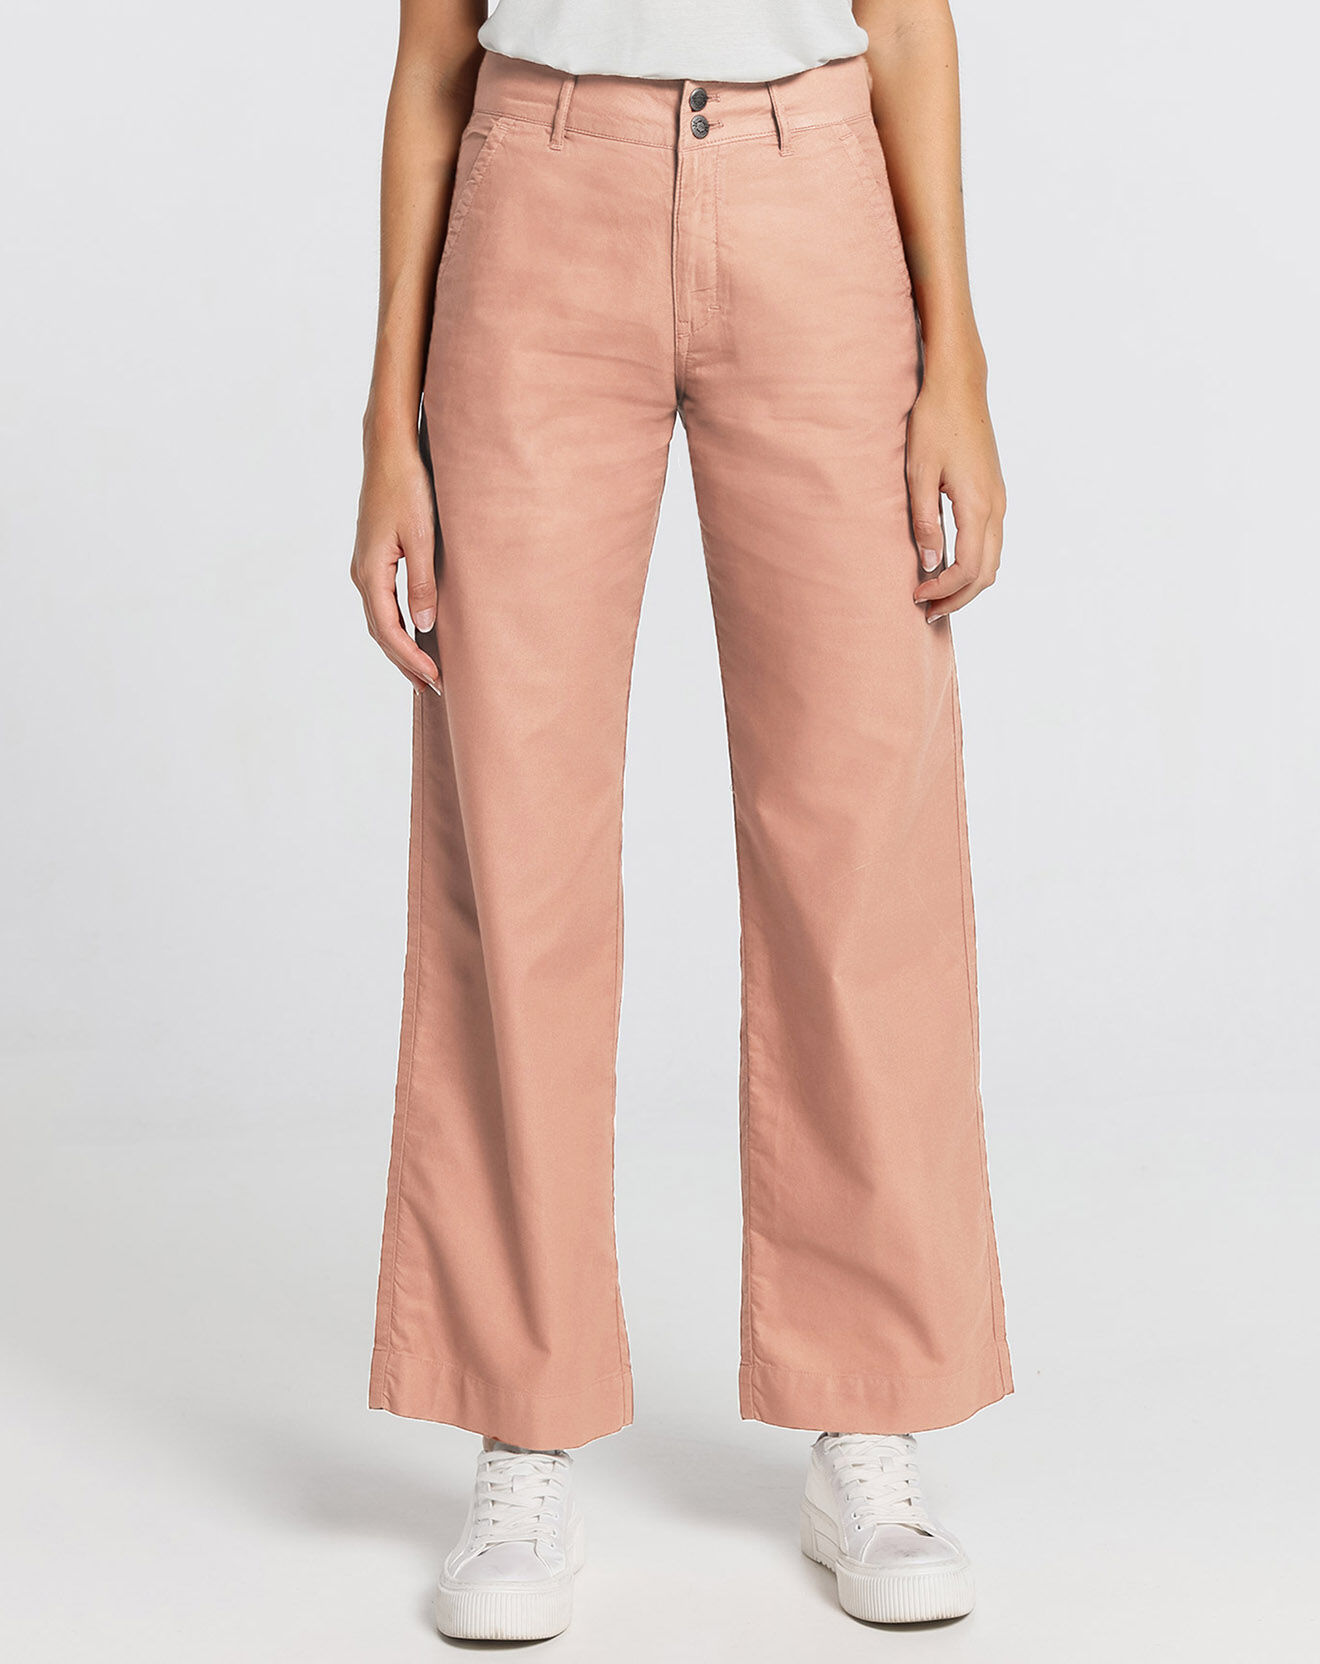 cimarron - pantalon chino olivia-ariane rosa